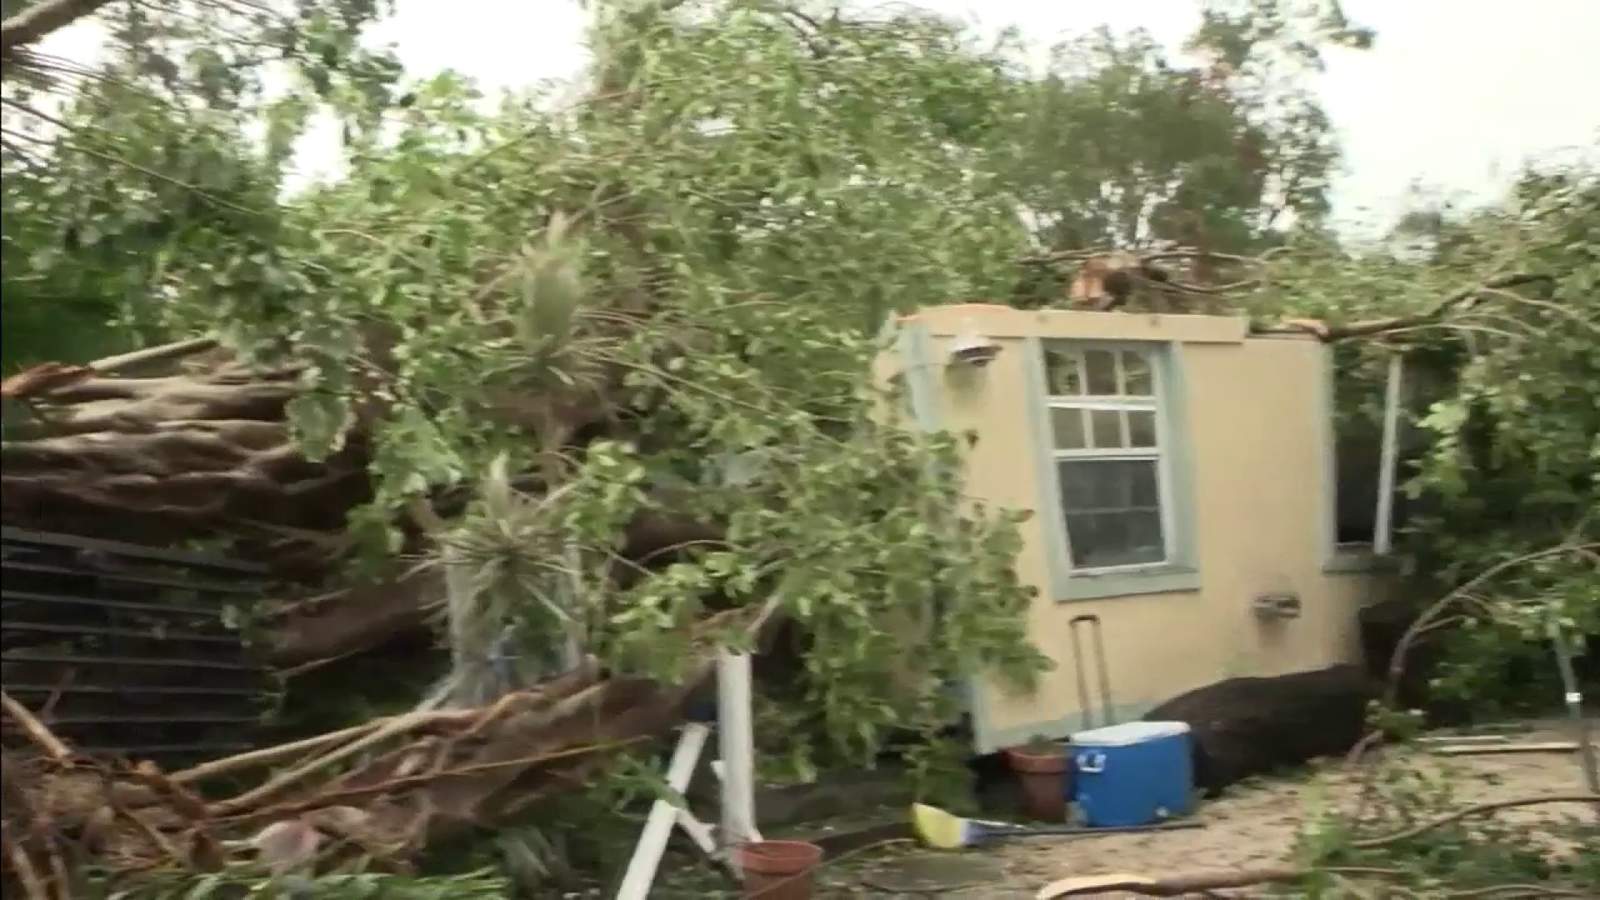 Key Largo neighbors rescue injured man, dog after Tropical Storm Eta sends tree crashing into home